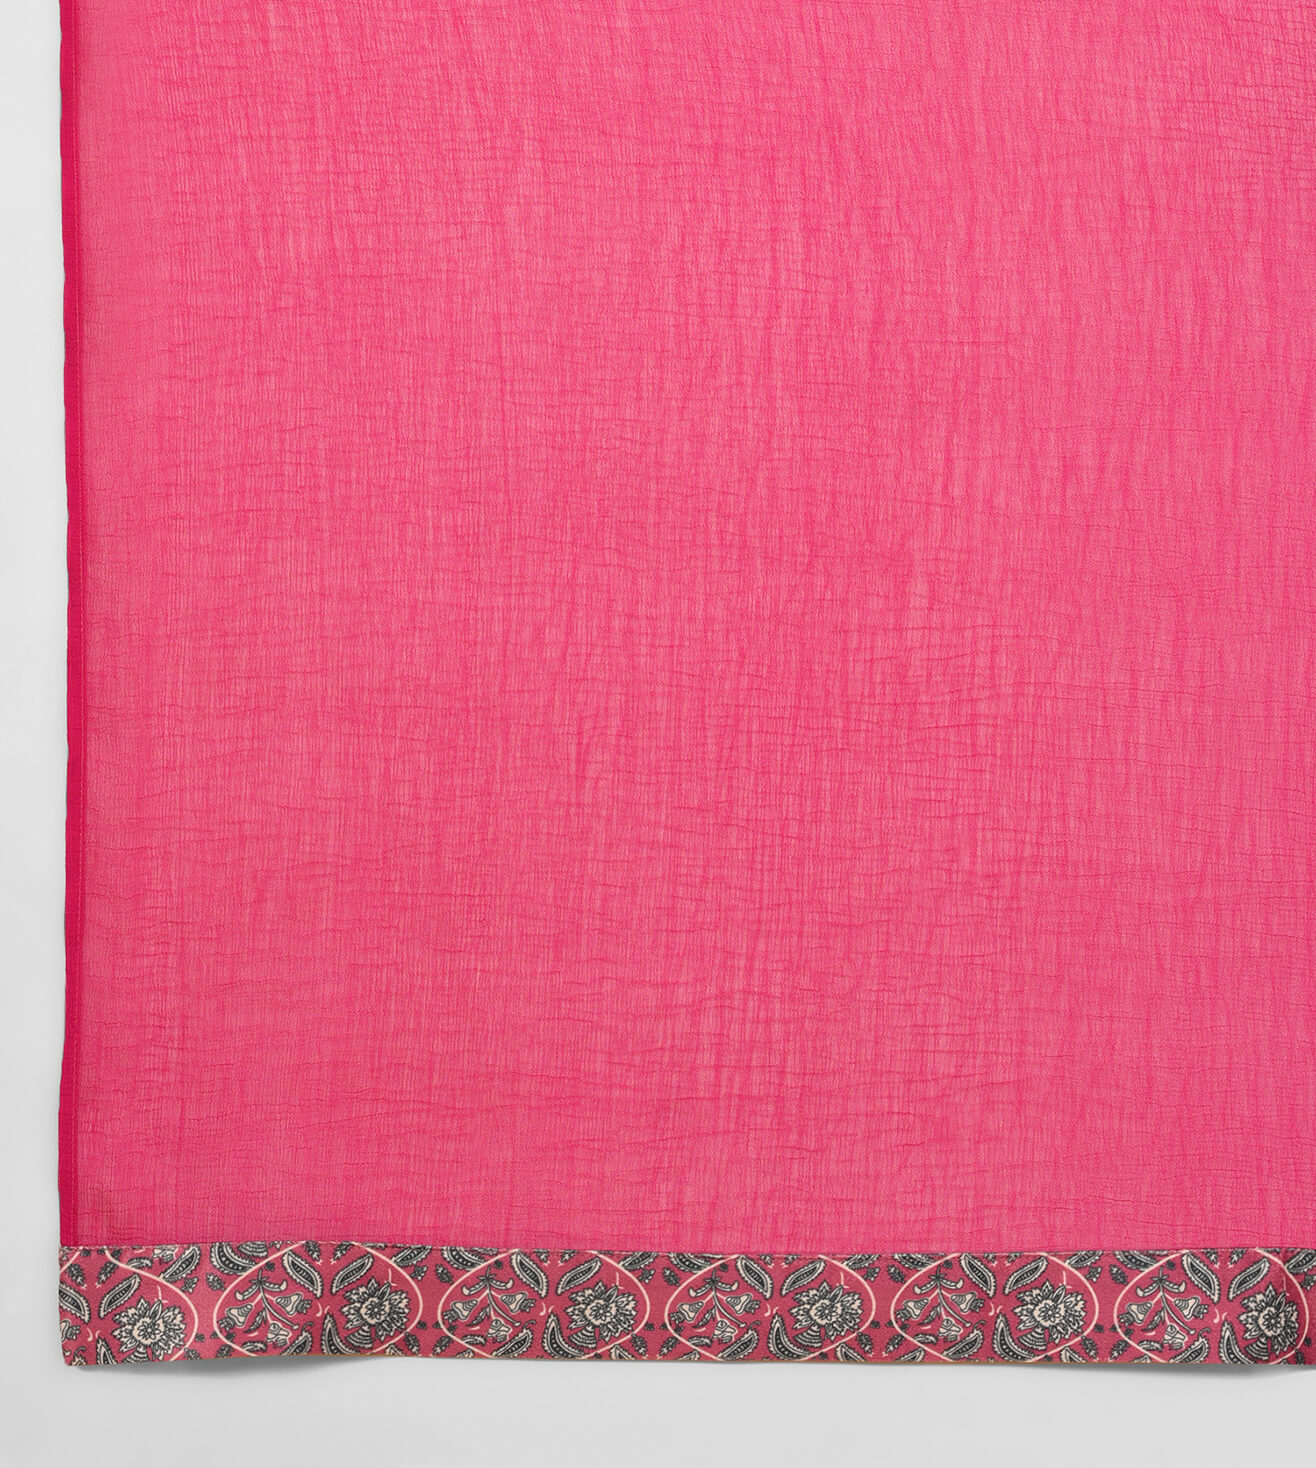 Bougainvillea Pink printed velvet Kurta Pant Dupatta set